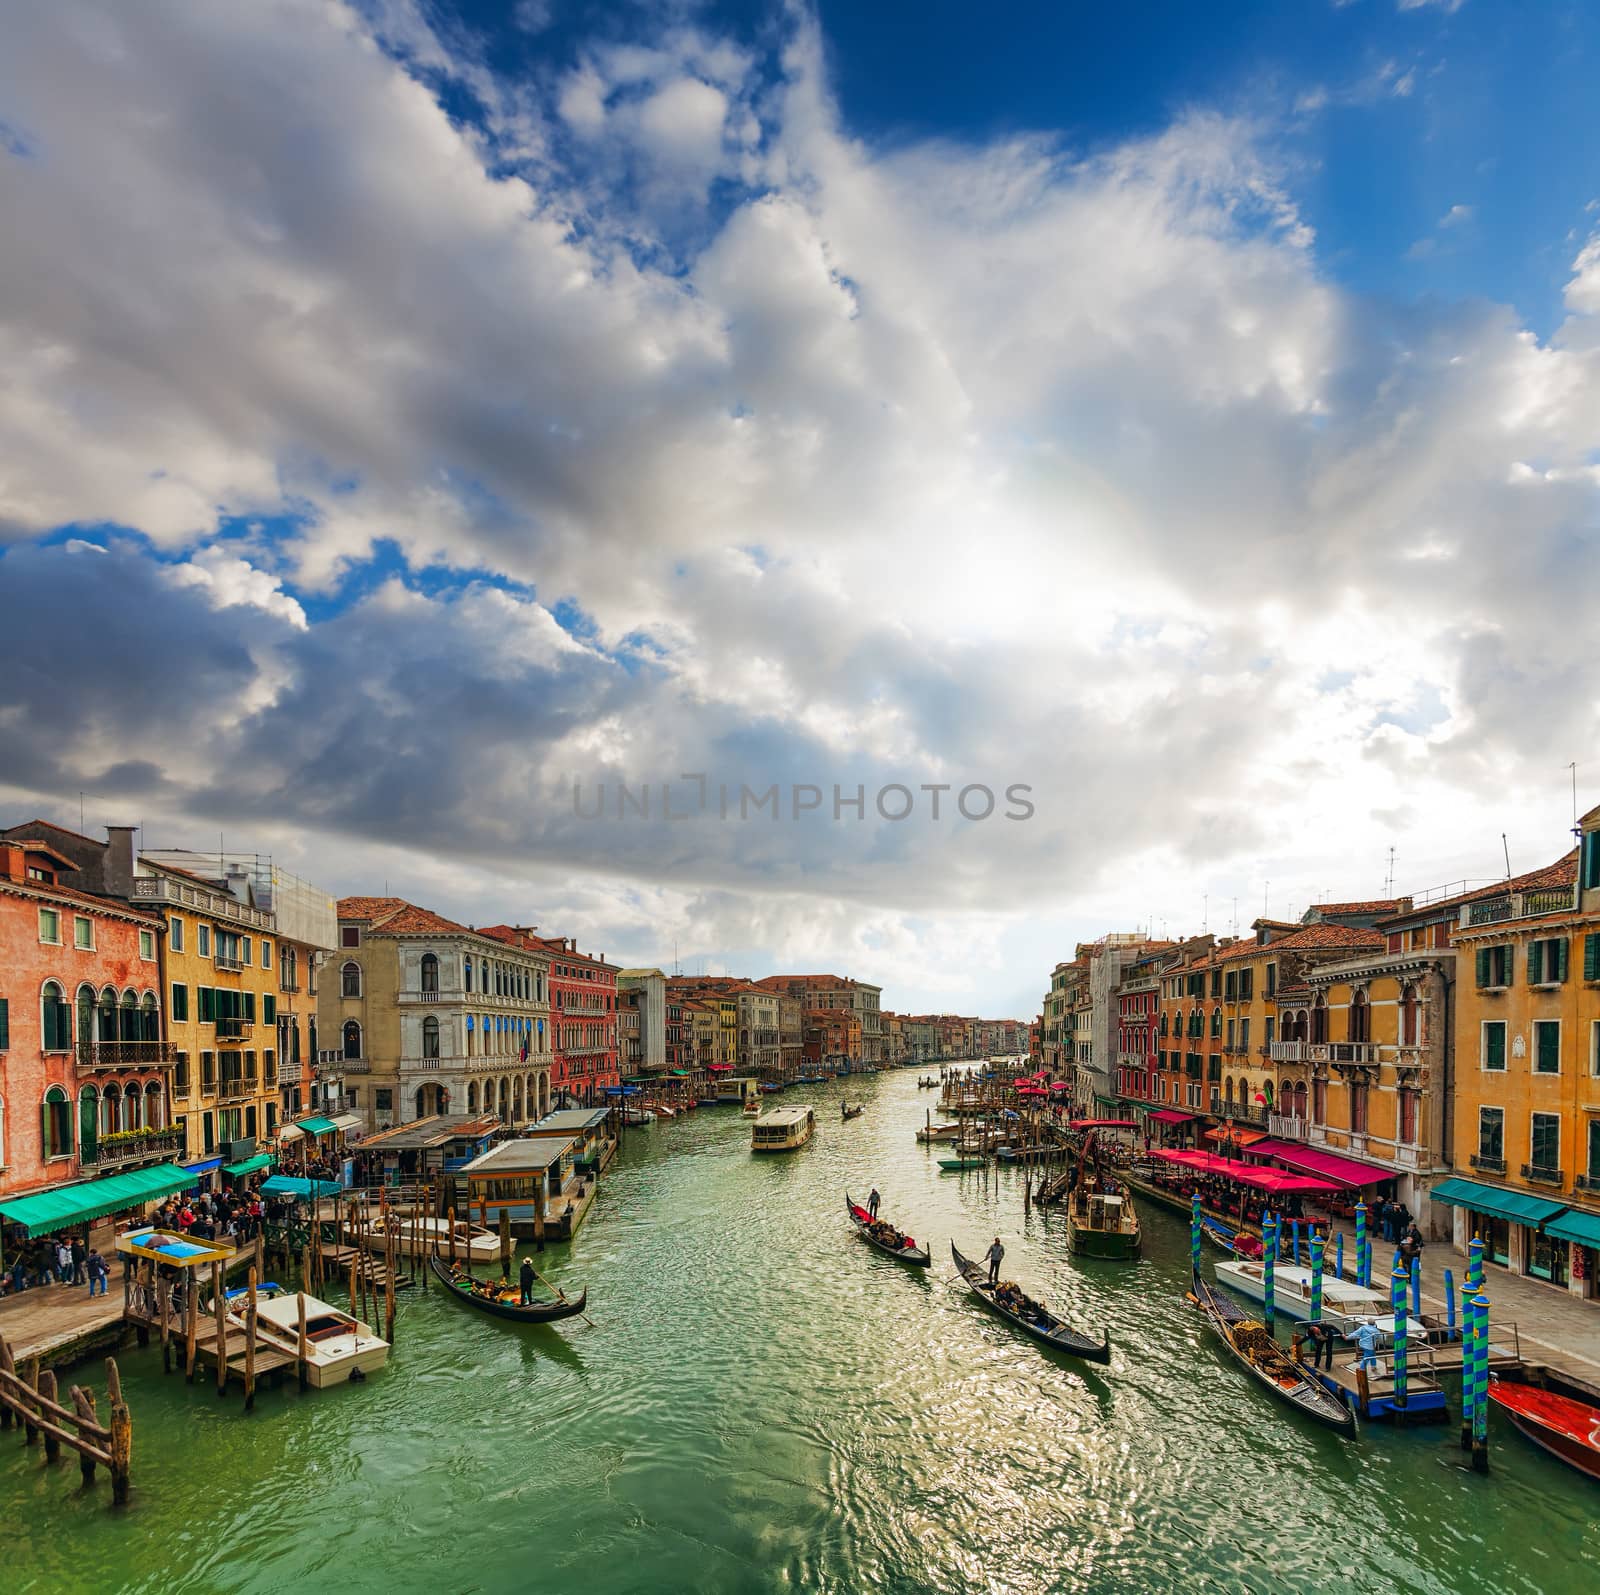  Venice - gondolas and boats on the Grand Canal, View from Bridge Rialto